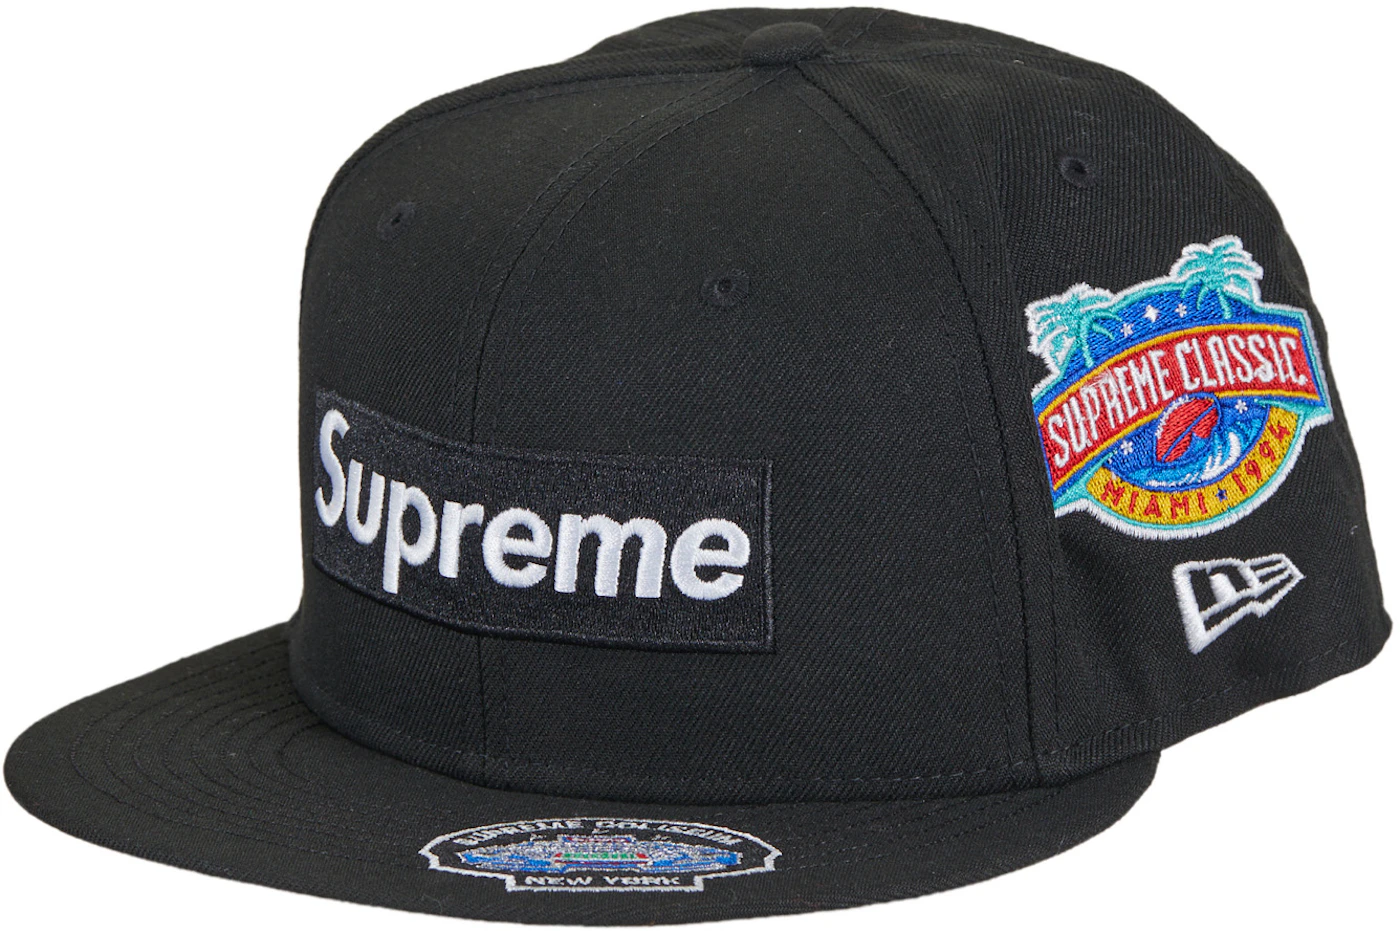 Supreme Championships Box Logo New Era Fitted Hat Black - FW23 - US